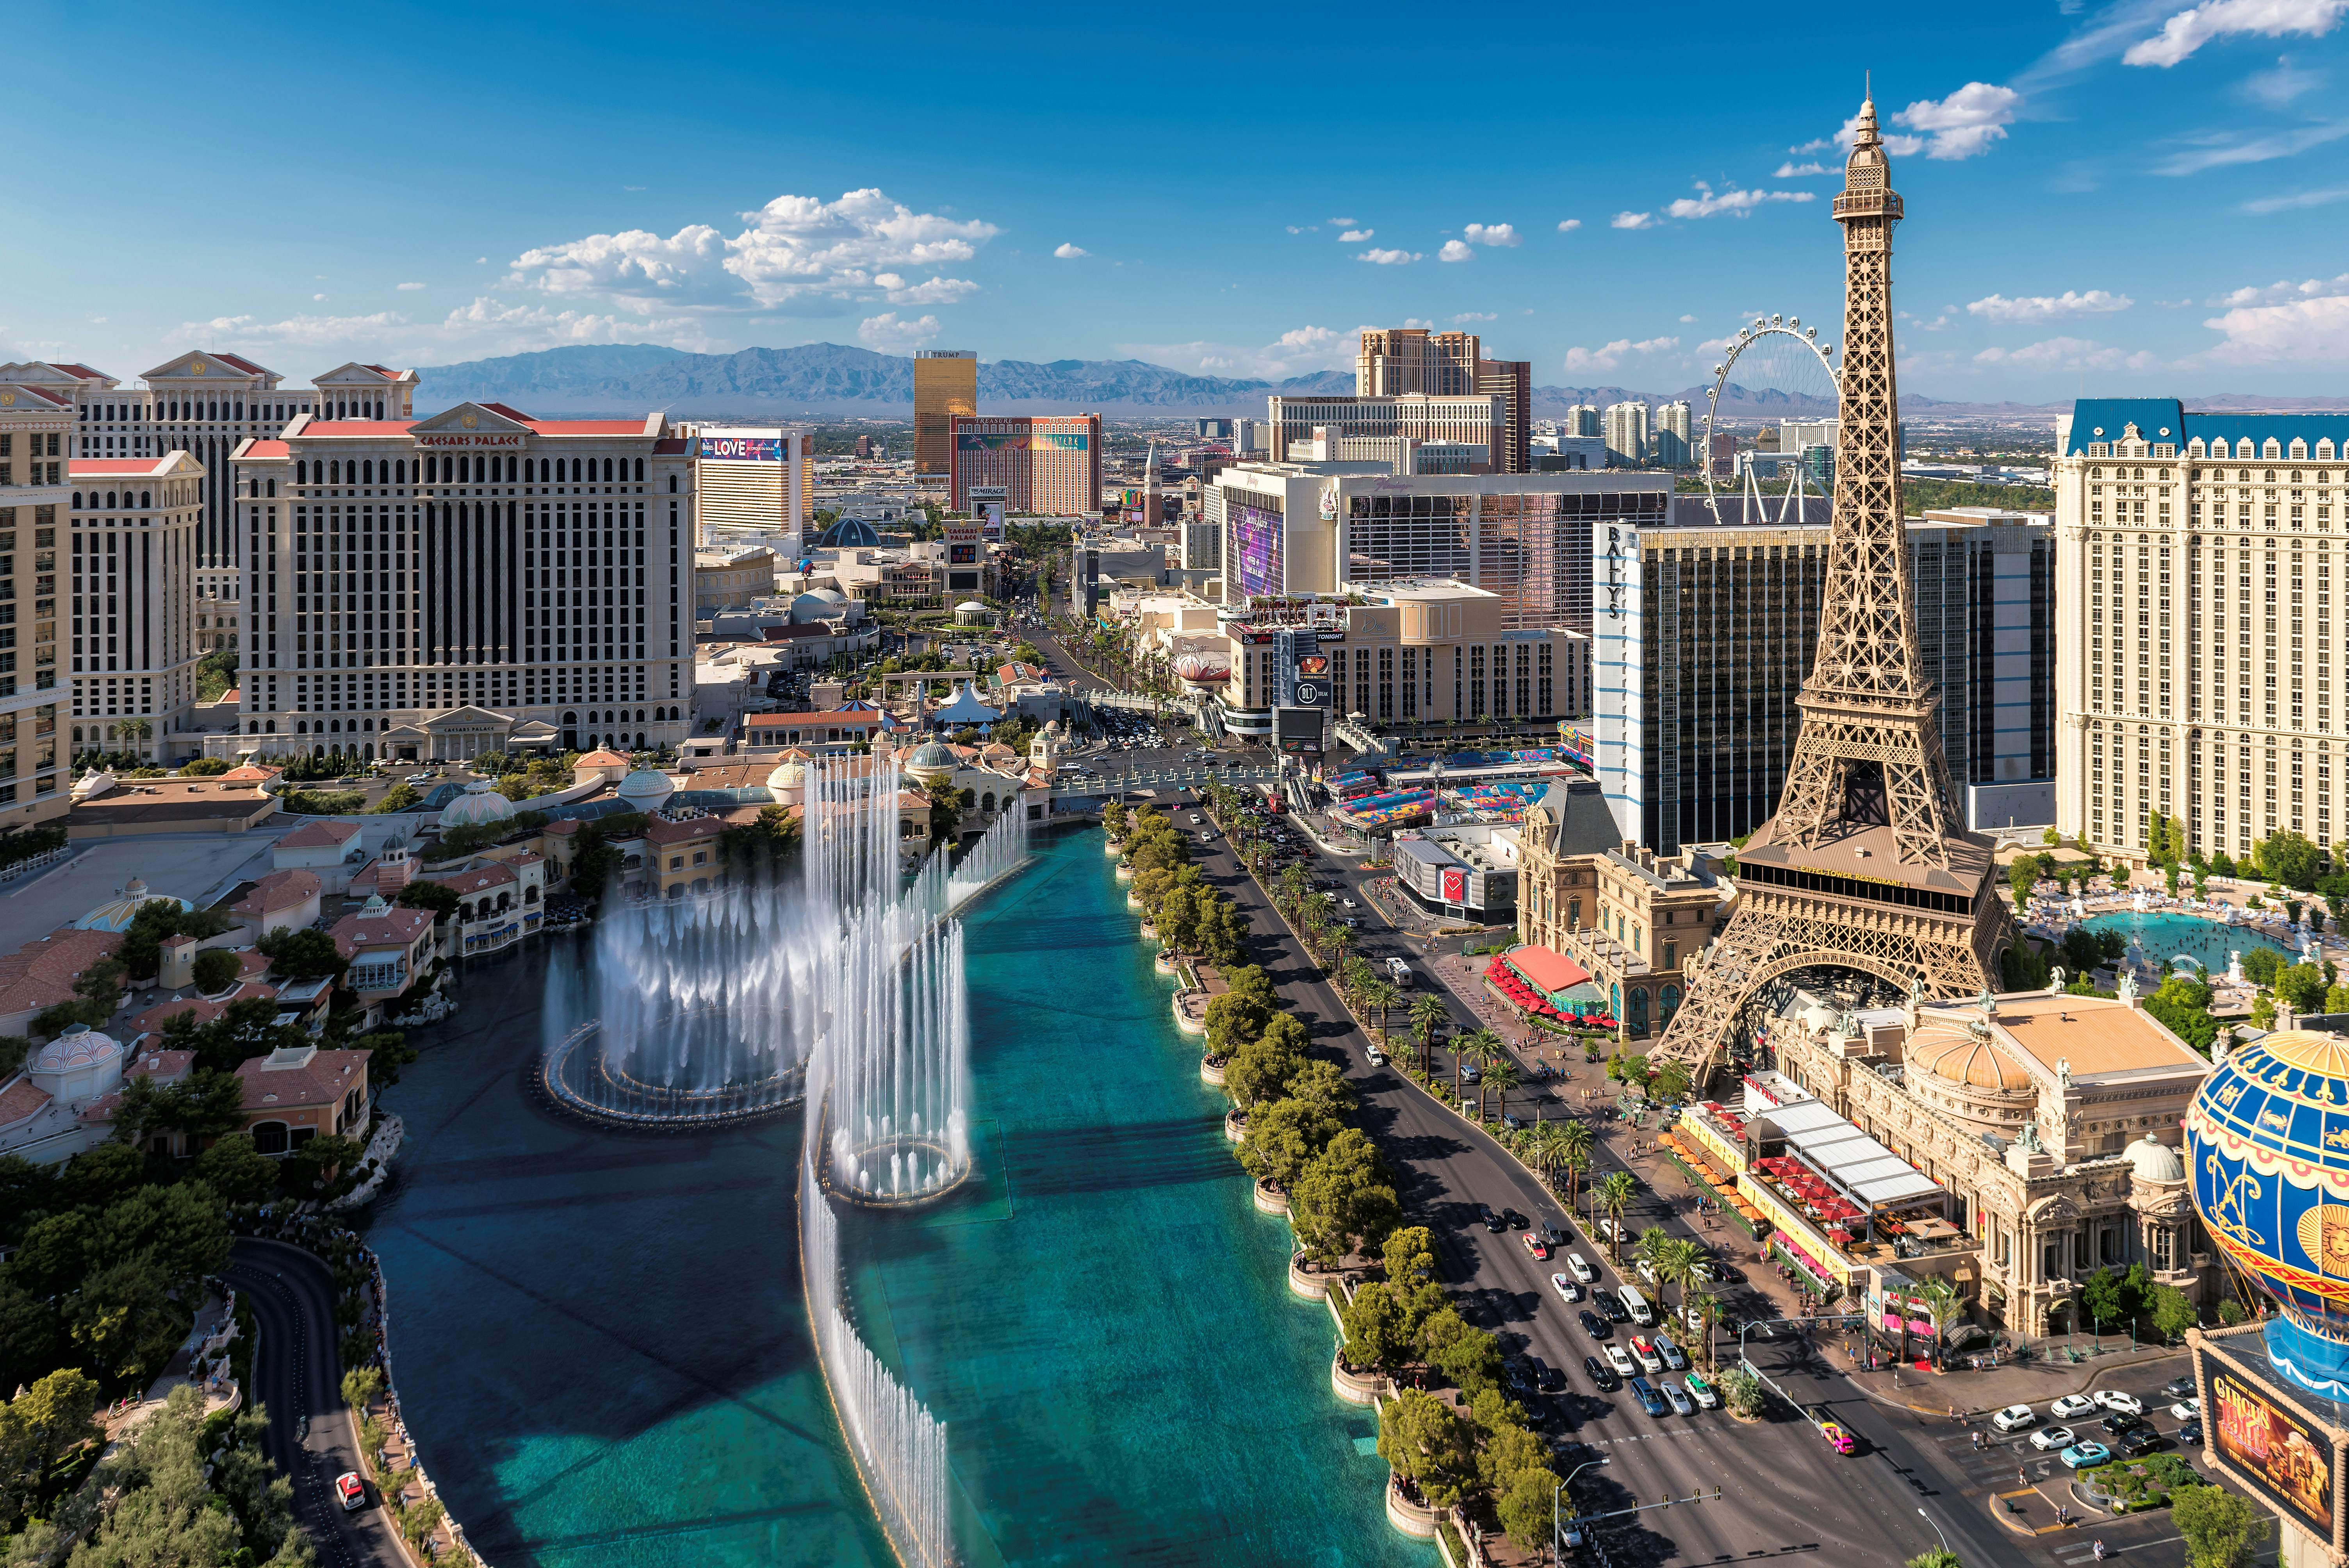 The Famous Las Vegas Strip In Front Of The Paris Casino. Picture